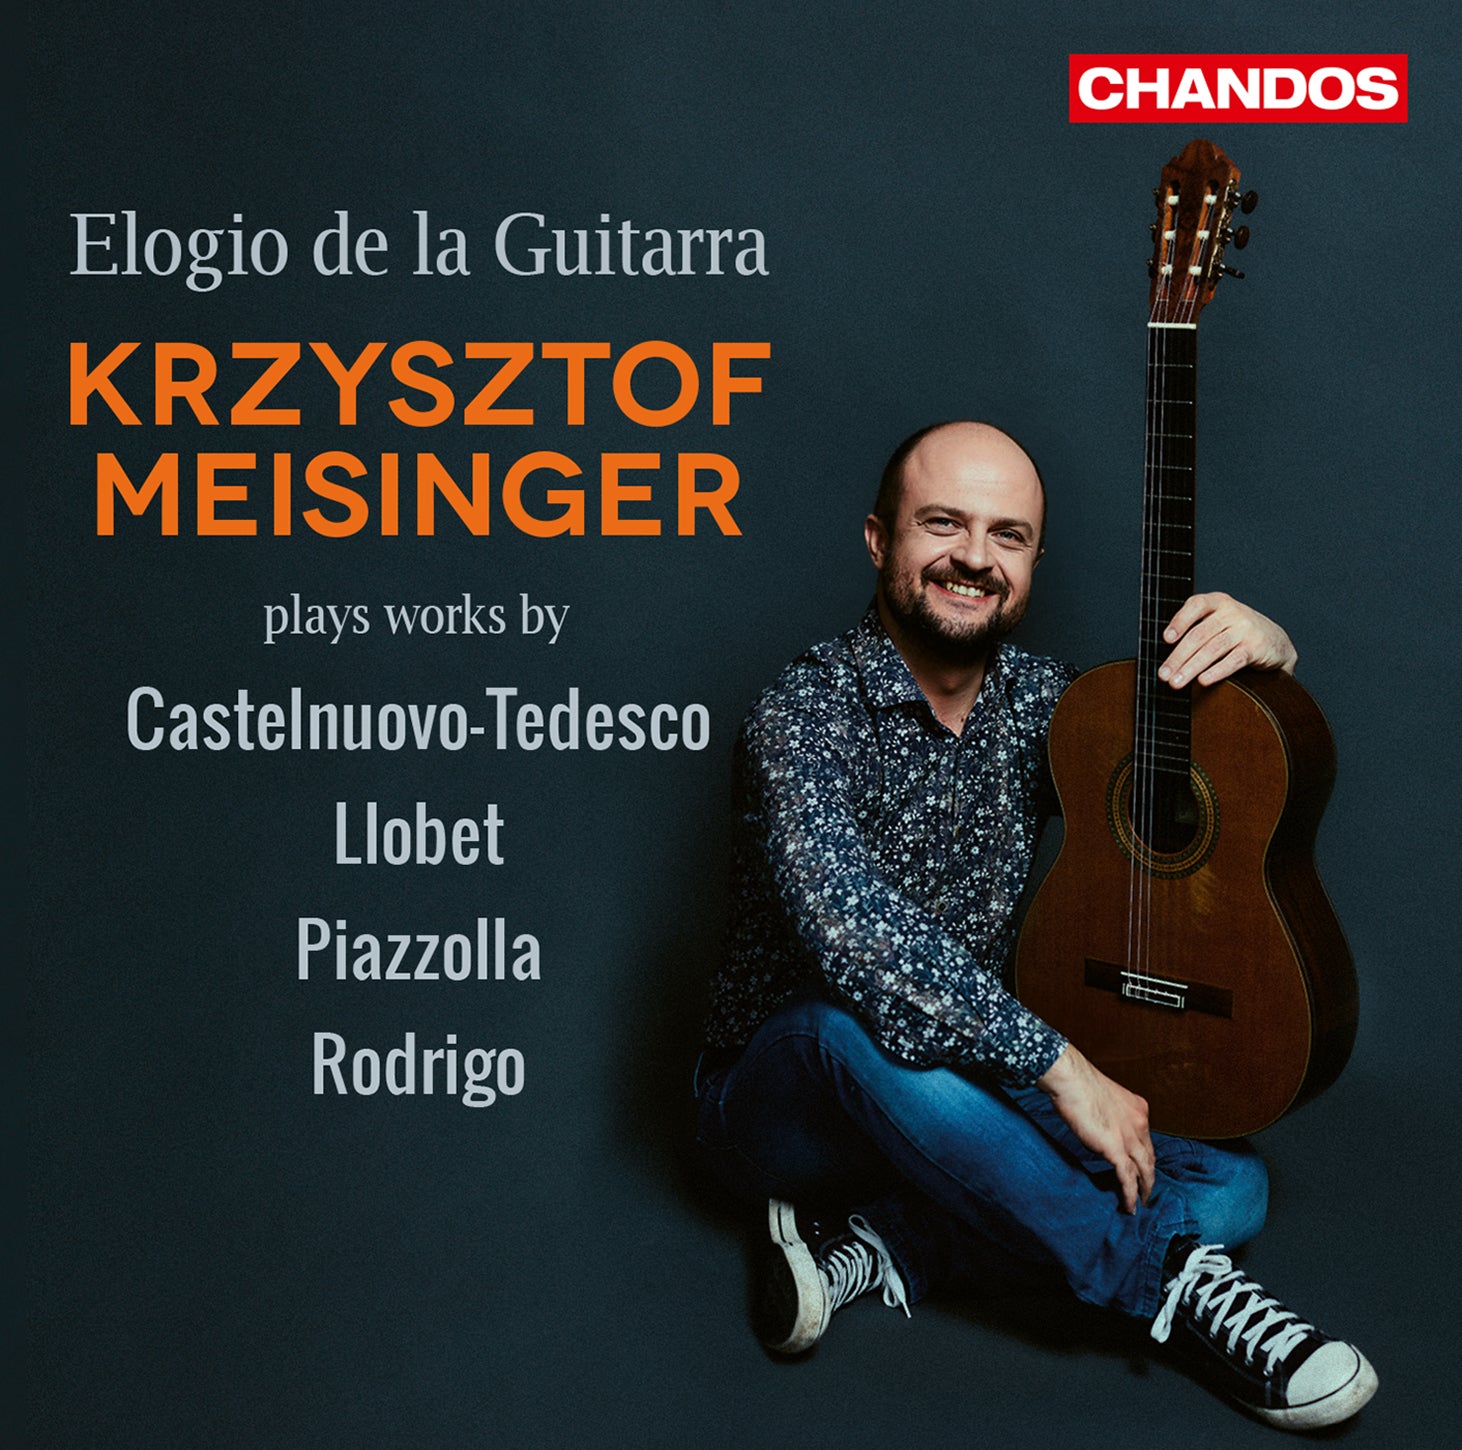 Elogio de la Guitarra / Krzysztof Meisinger